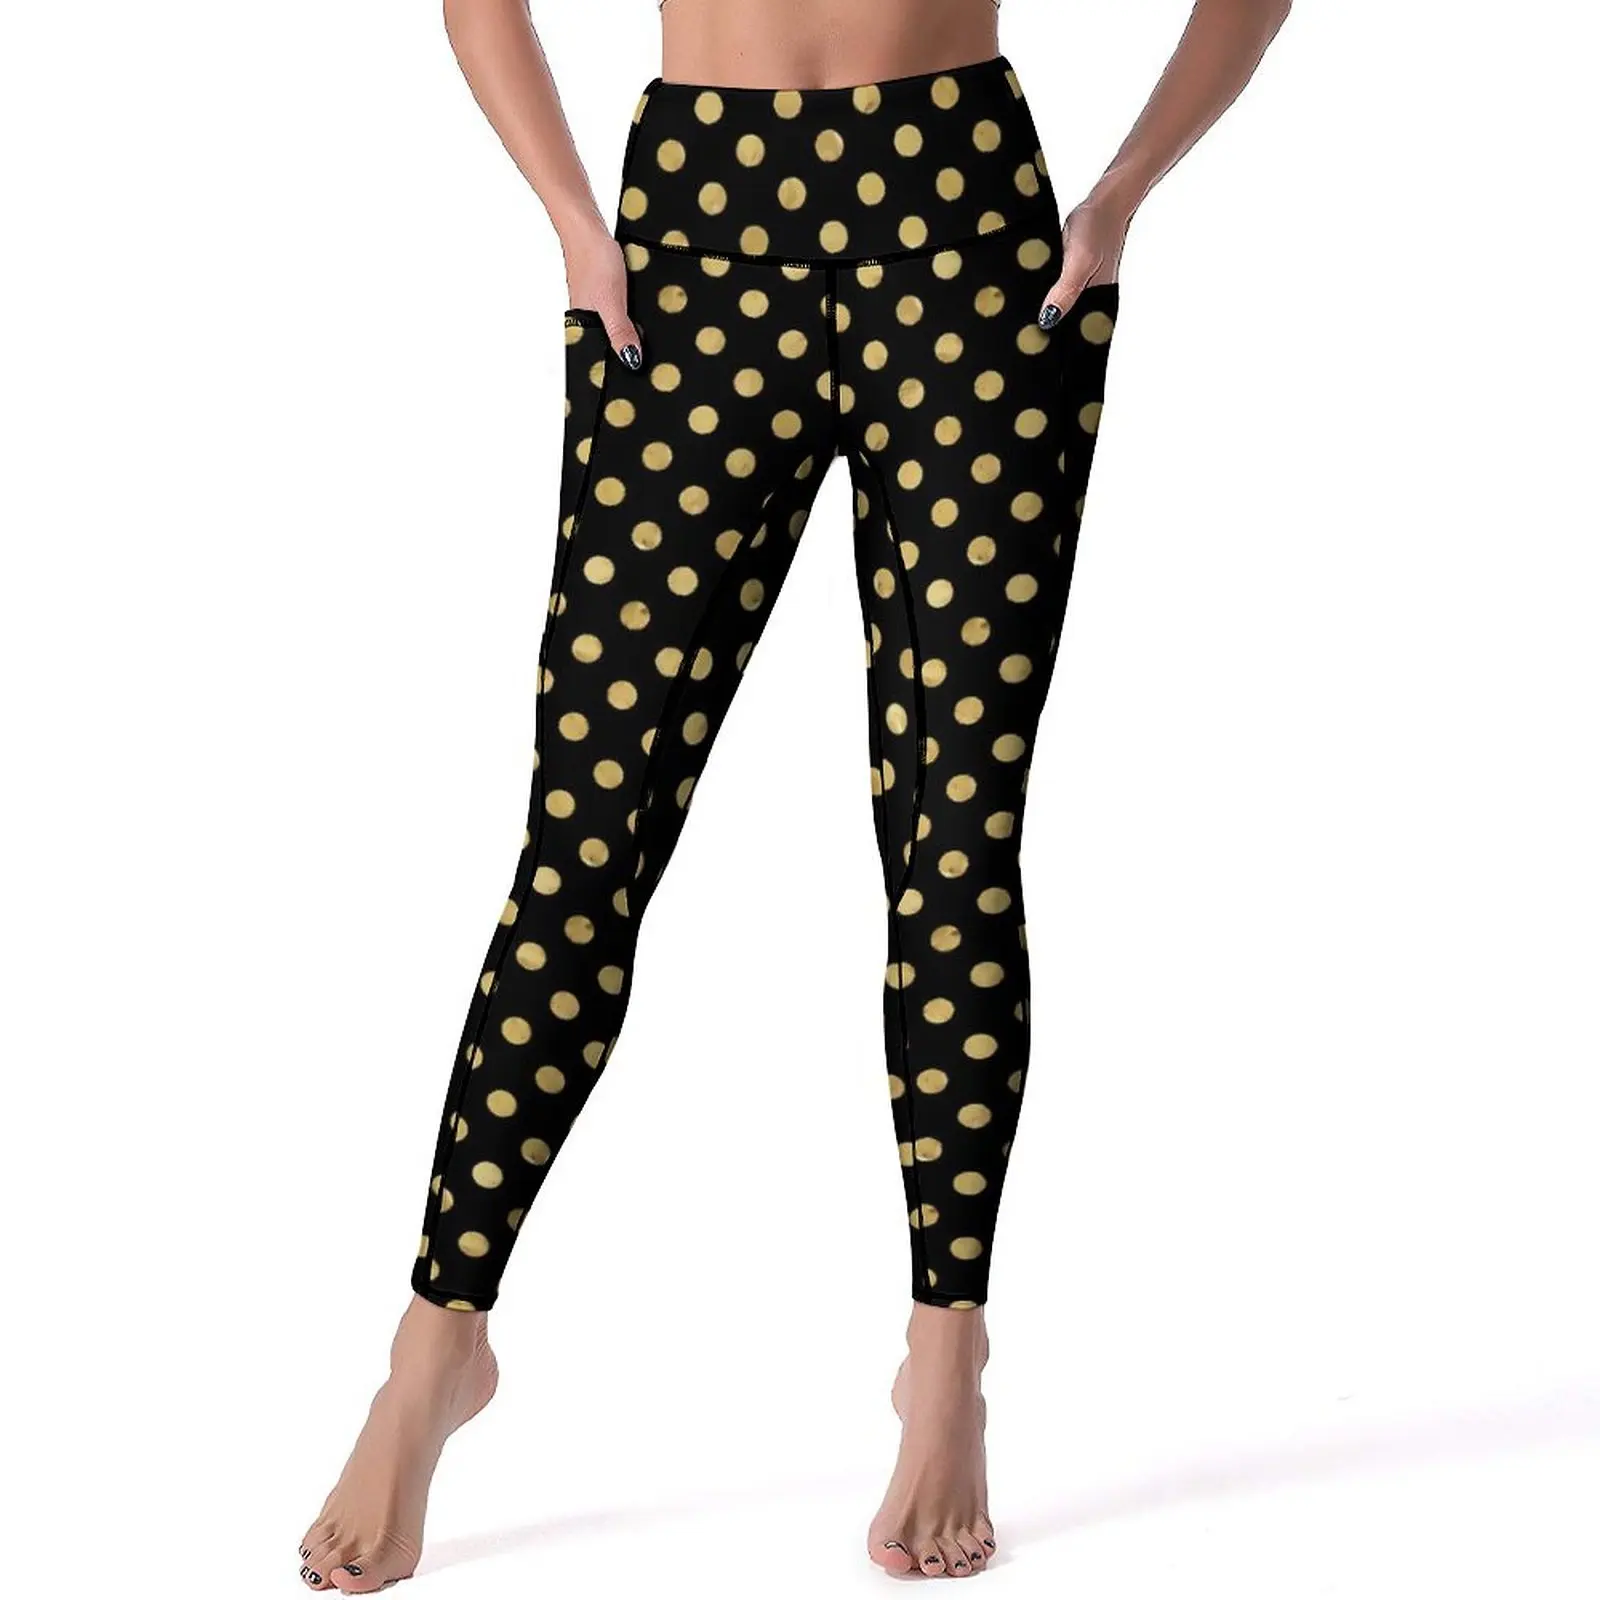 

Gold Dot Leggings Sexy Elegant Polka Dots Gym Yoga Pants High Waist Stretchy Sports Tights Pockets Funny Graphic Leggins